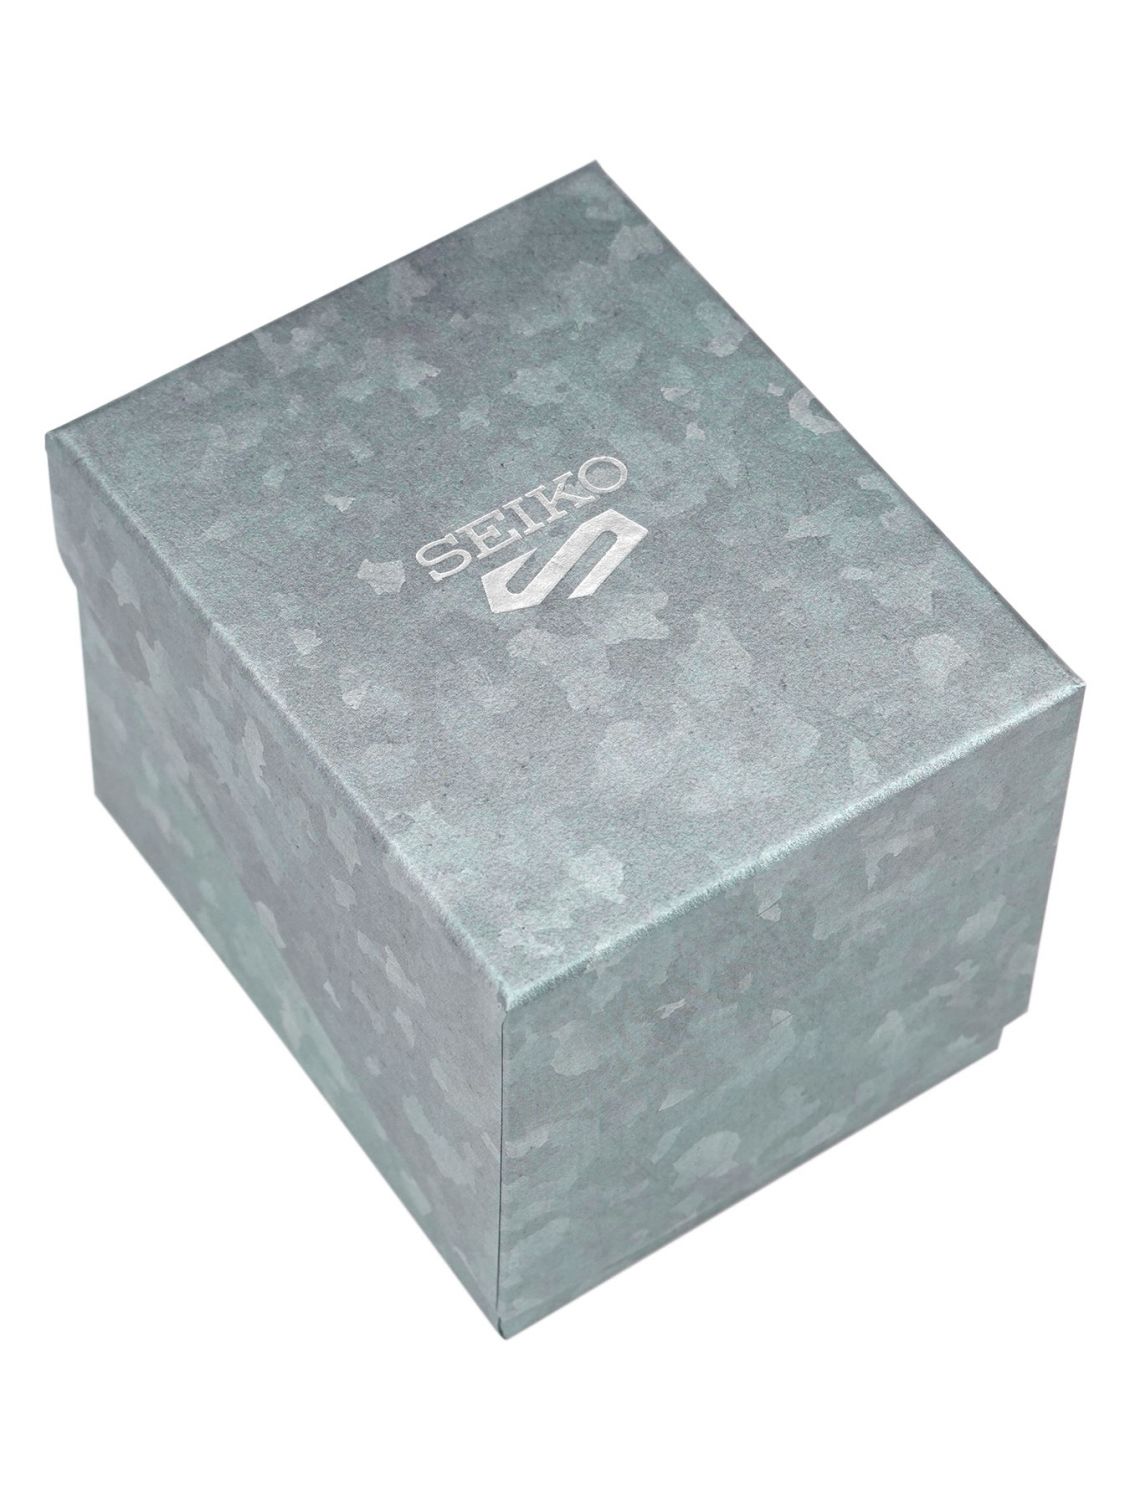 Seiko 5 Sports Unisex Automatic Watch Steel/Turquoise SRPK33K1 • uhrcenter